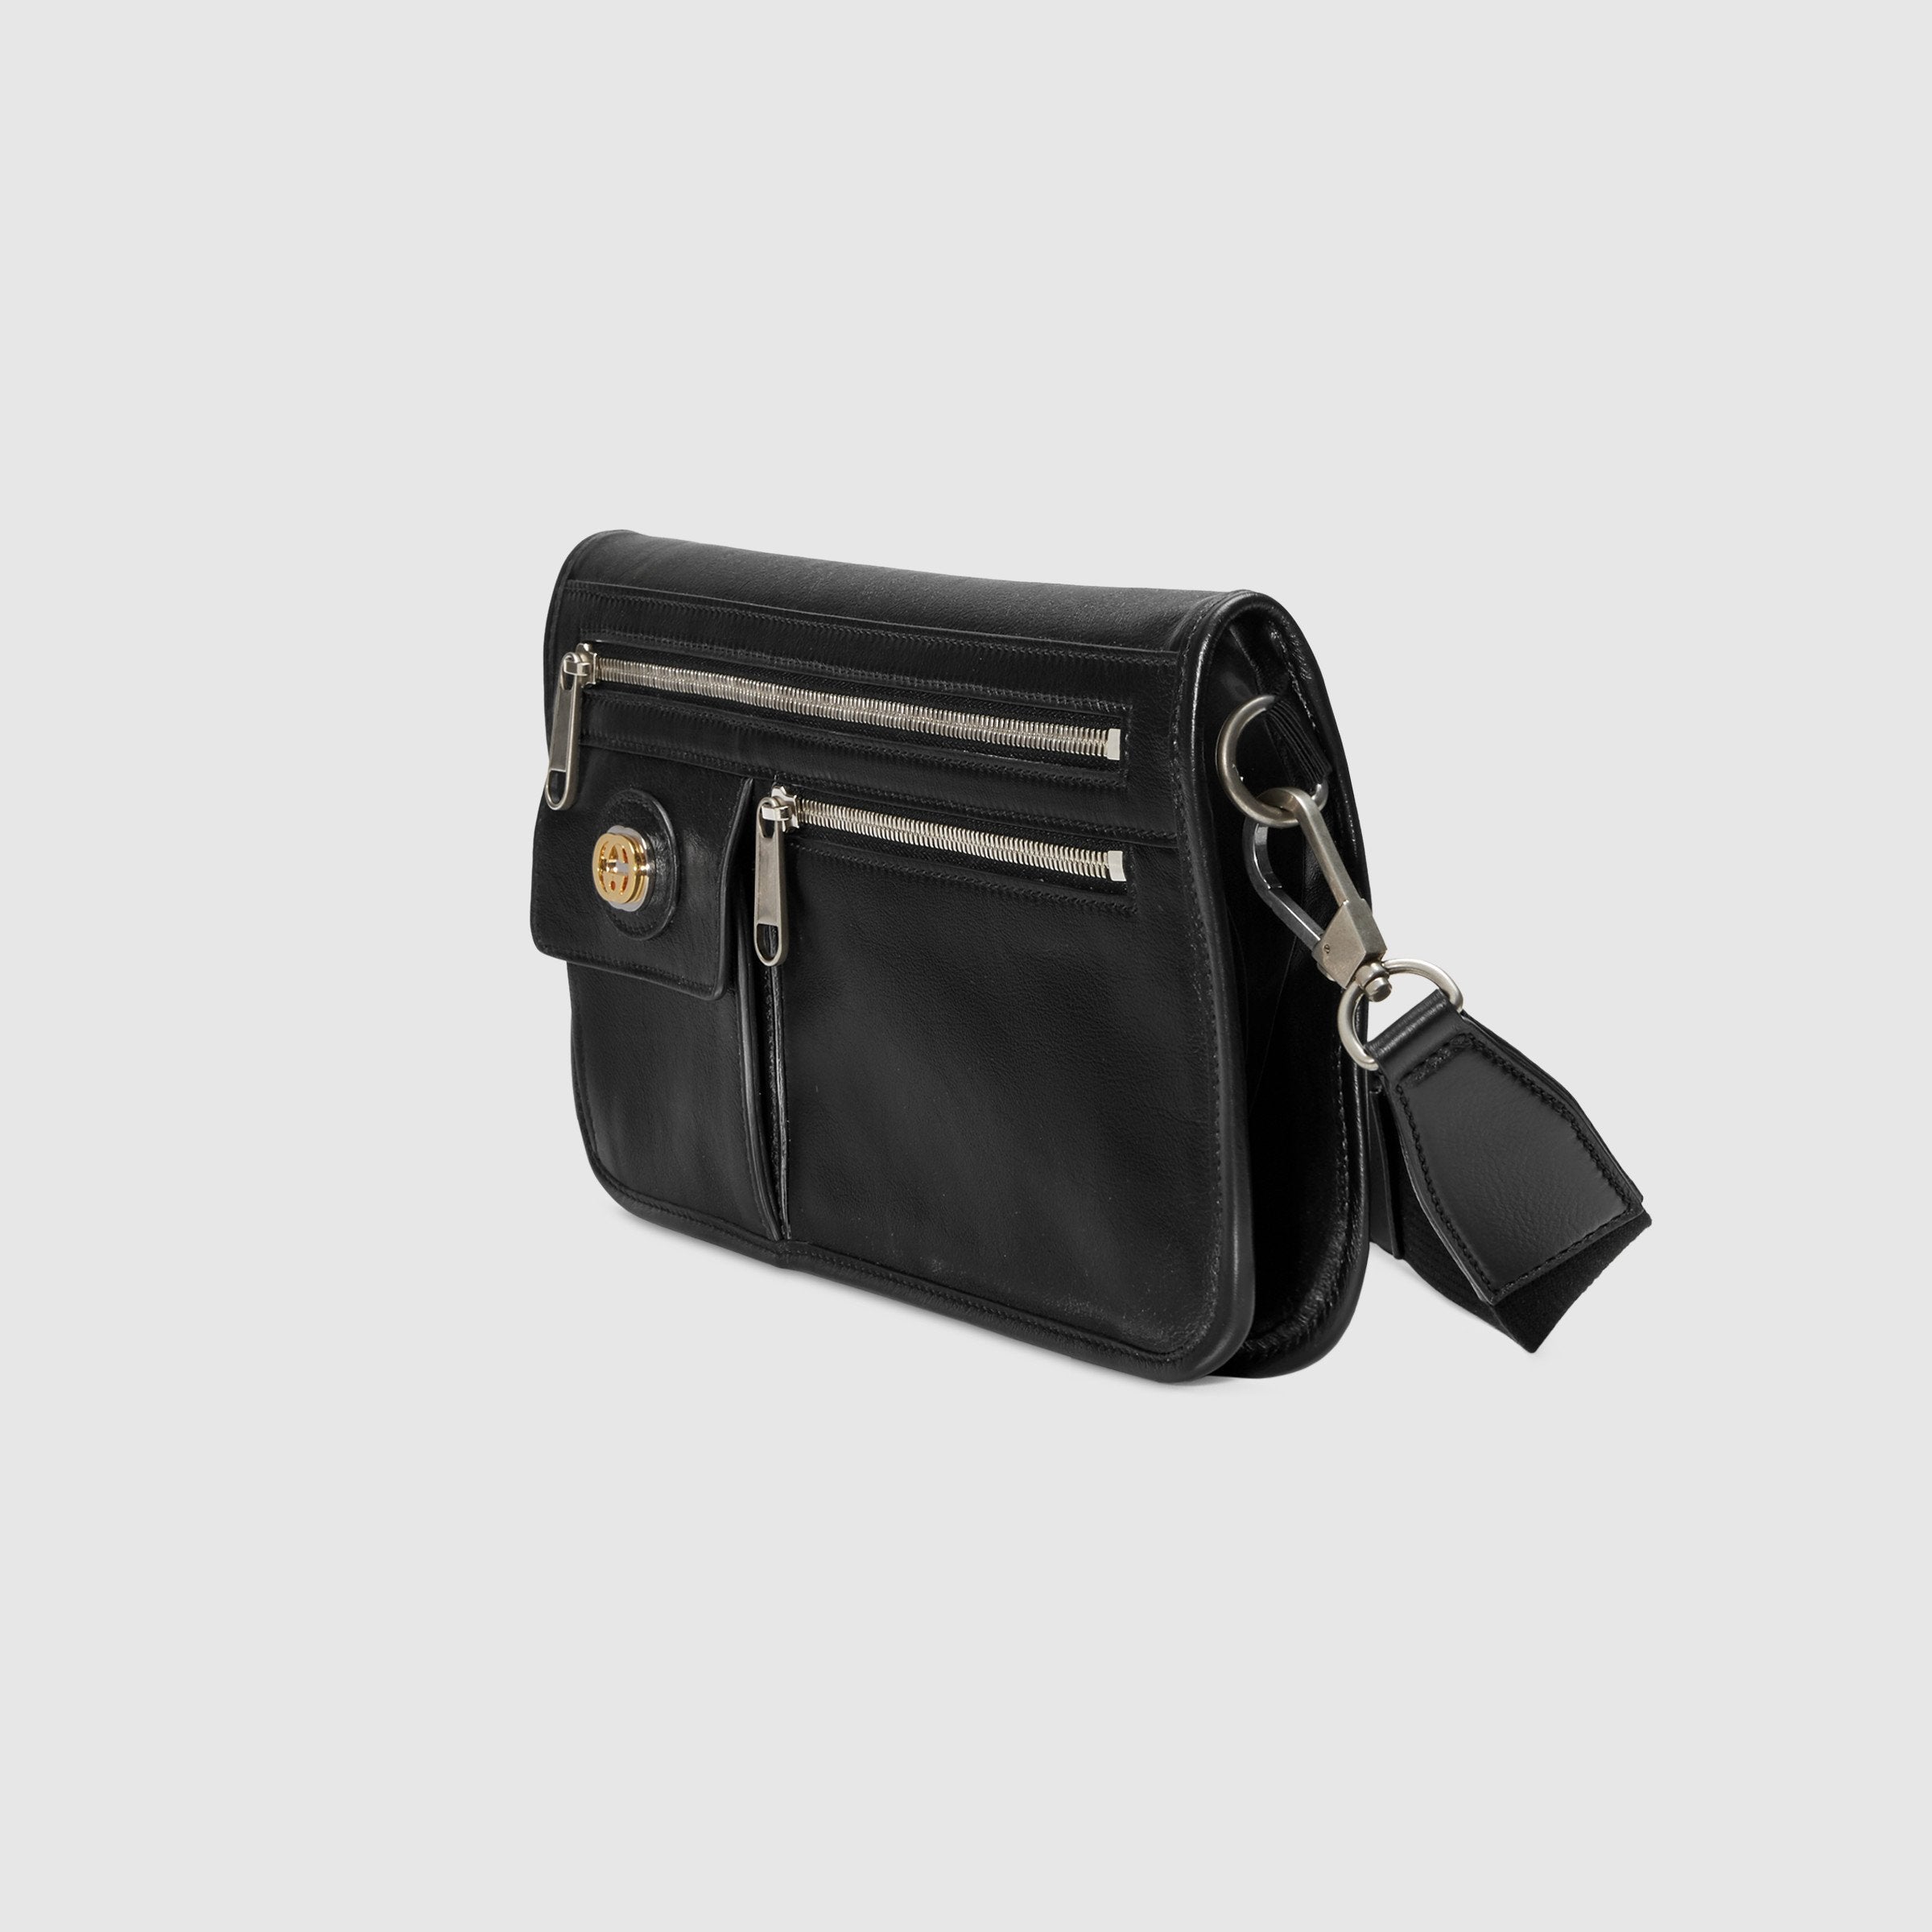 Gucci Medium Soft Leather Messenger Bag Black